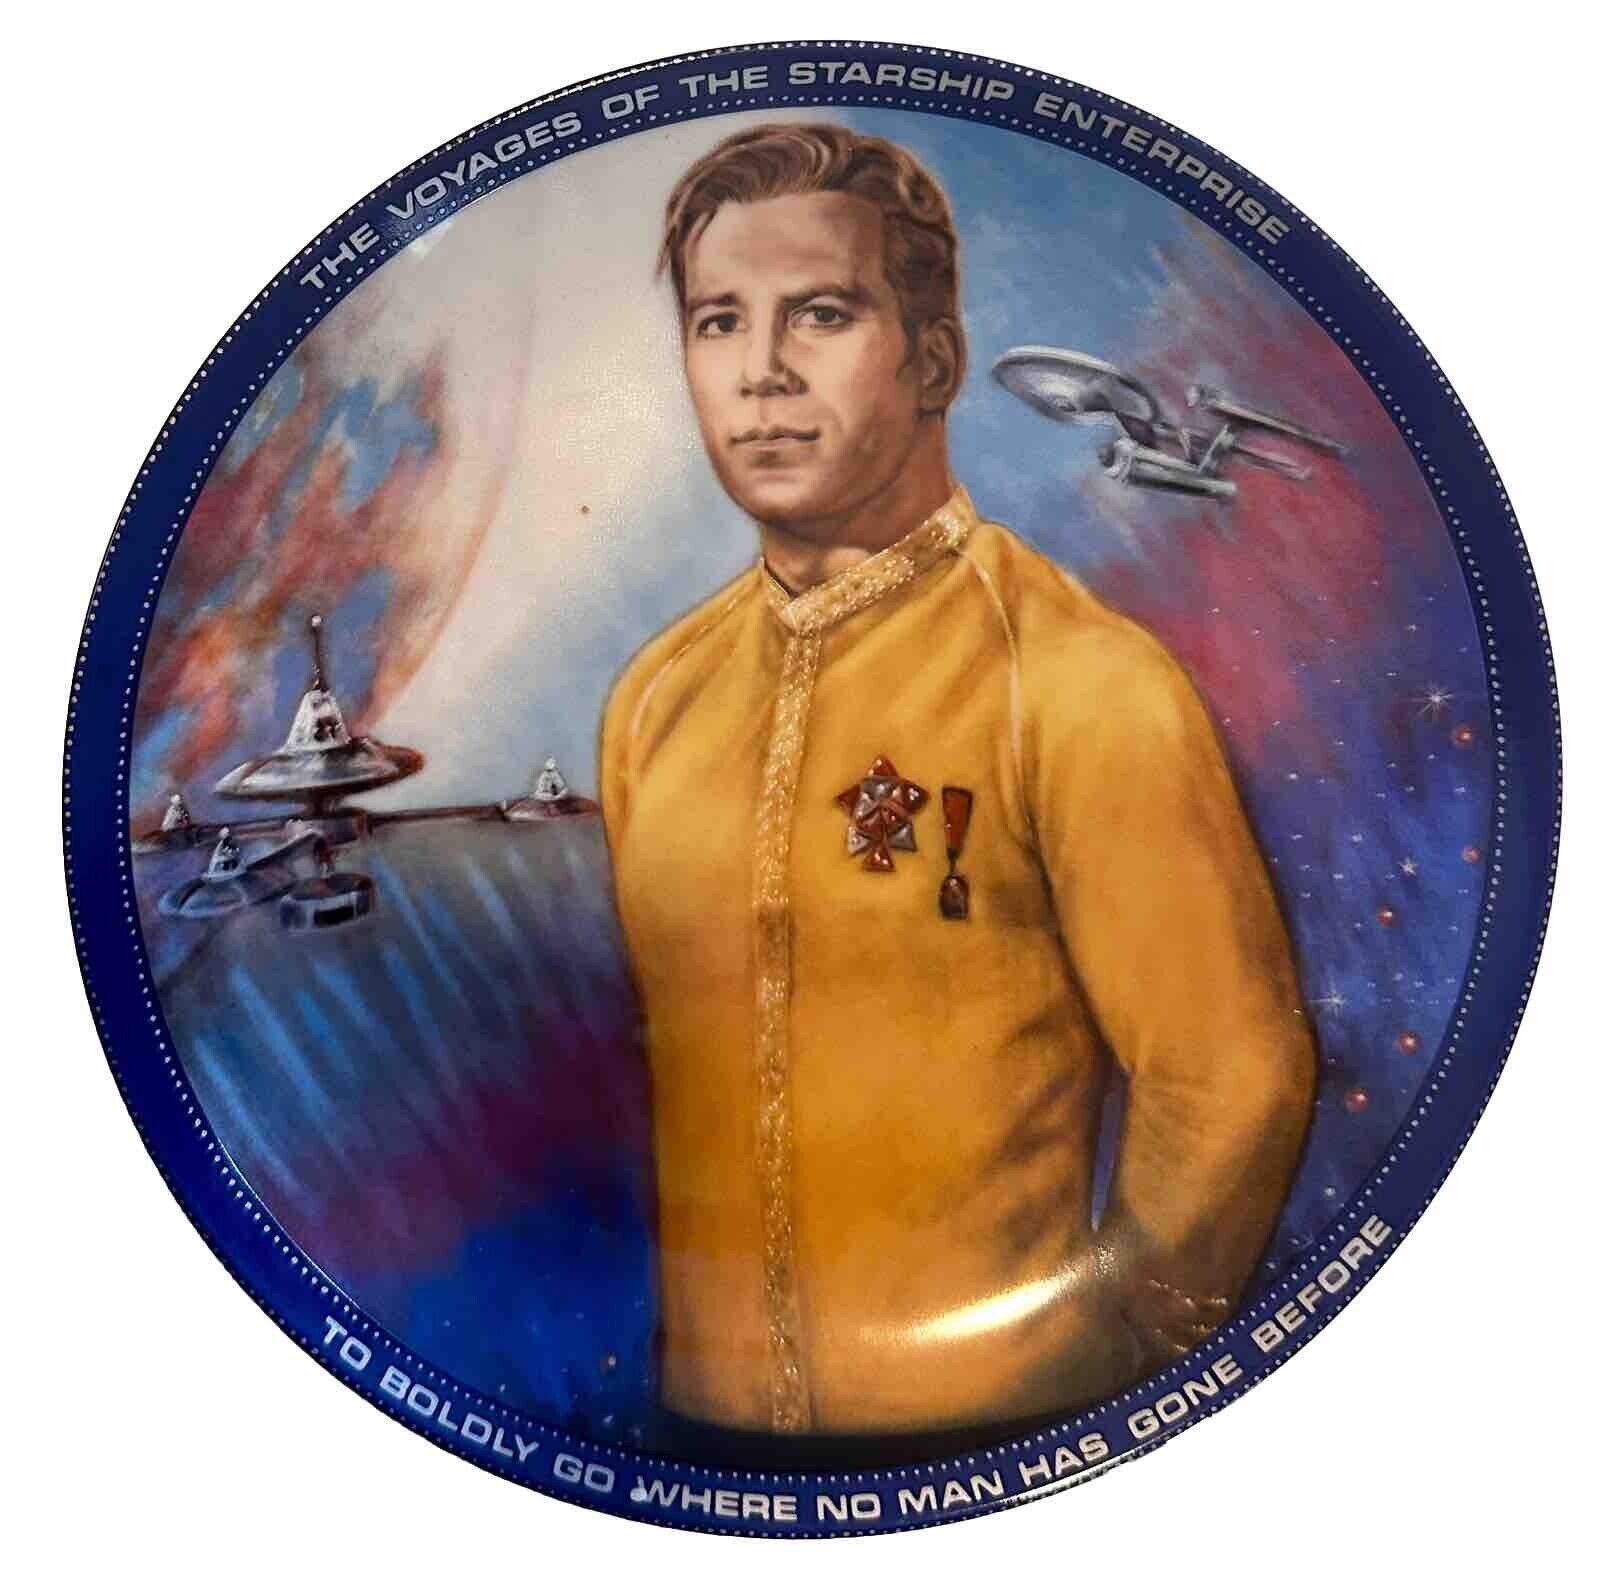 Hamilton Star Trek Plate Captain Kirk 4119P 1983 NWOB Mint Condition.